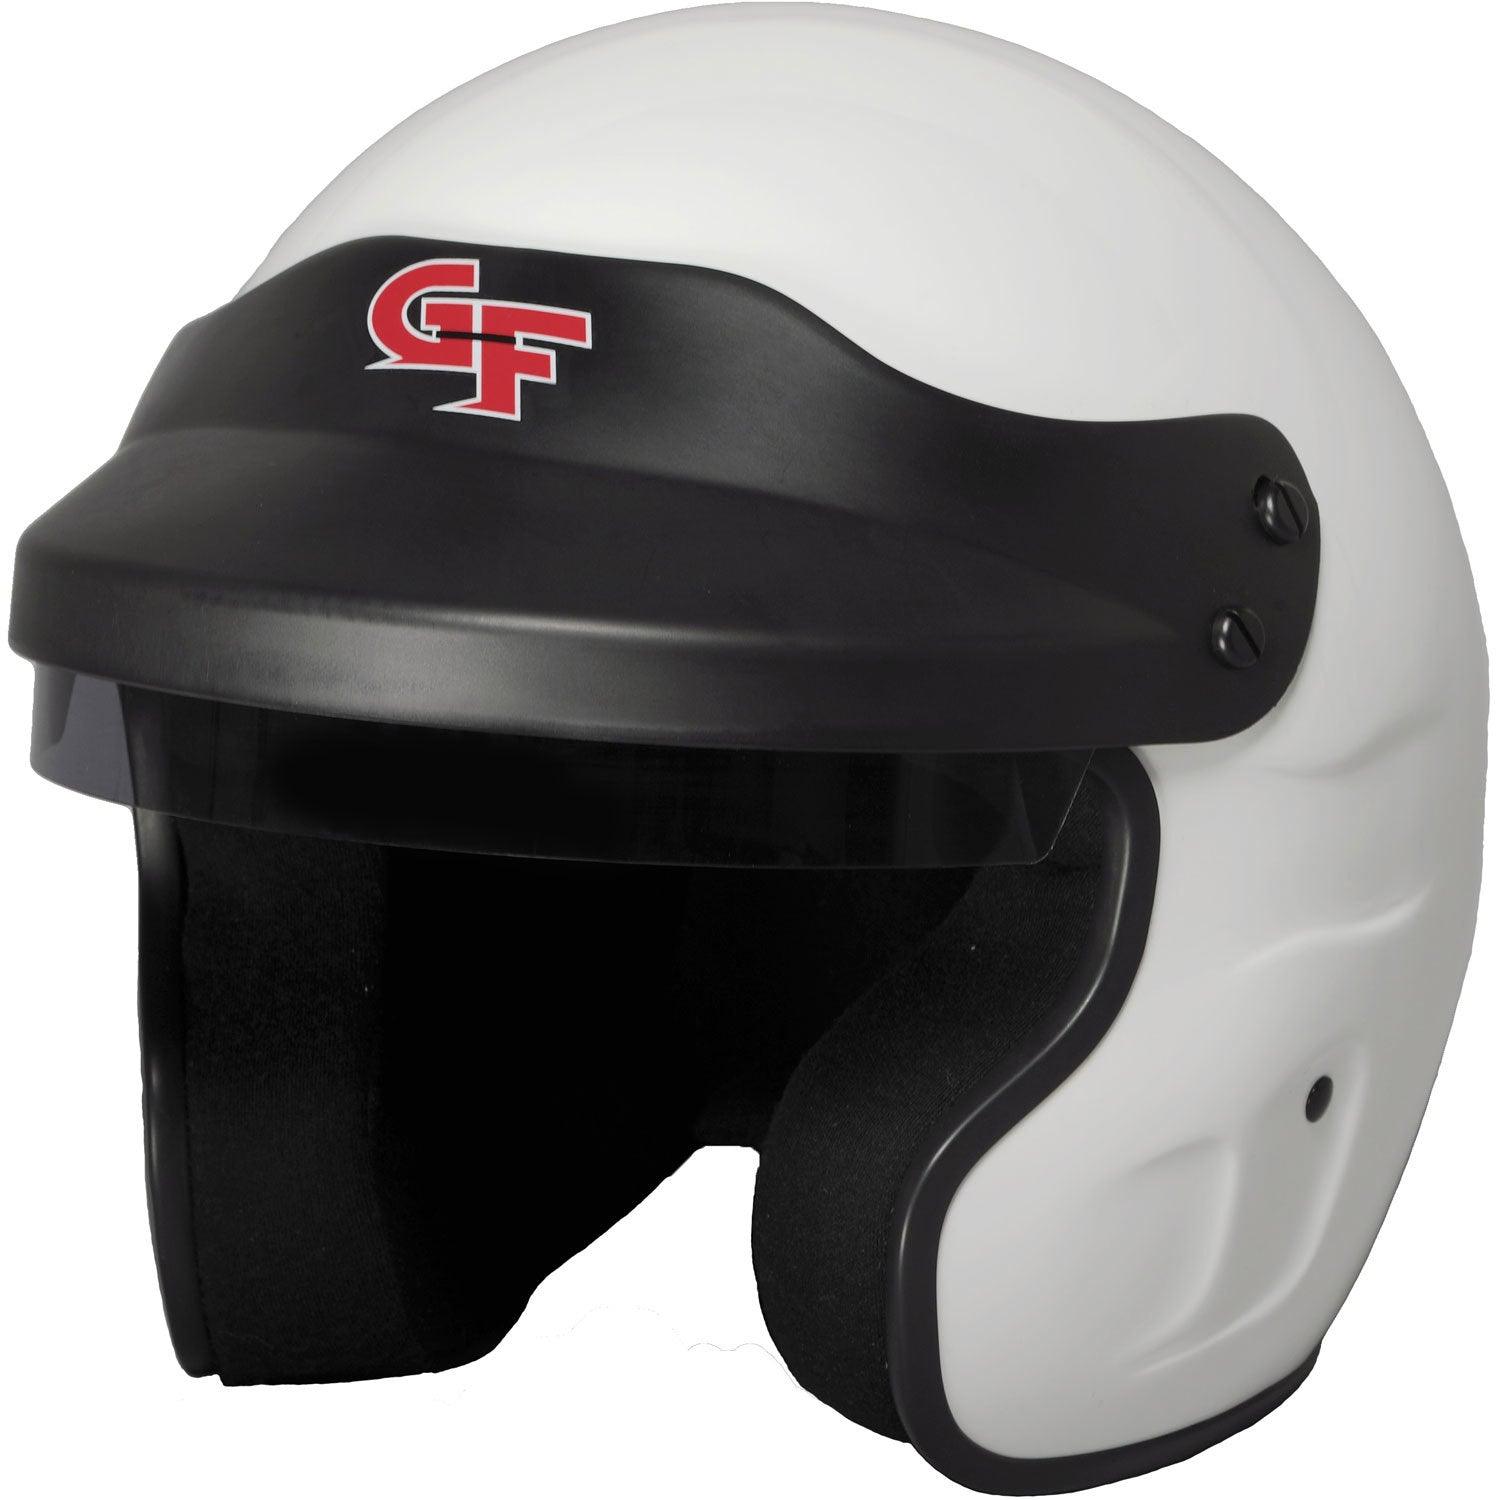 Helmet GF1 Open XX-Large White SA2020 - Burlile Performance Products